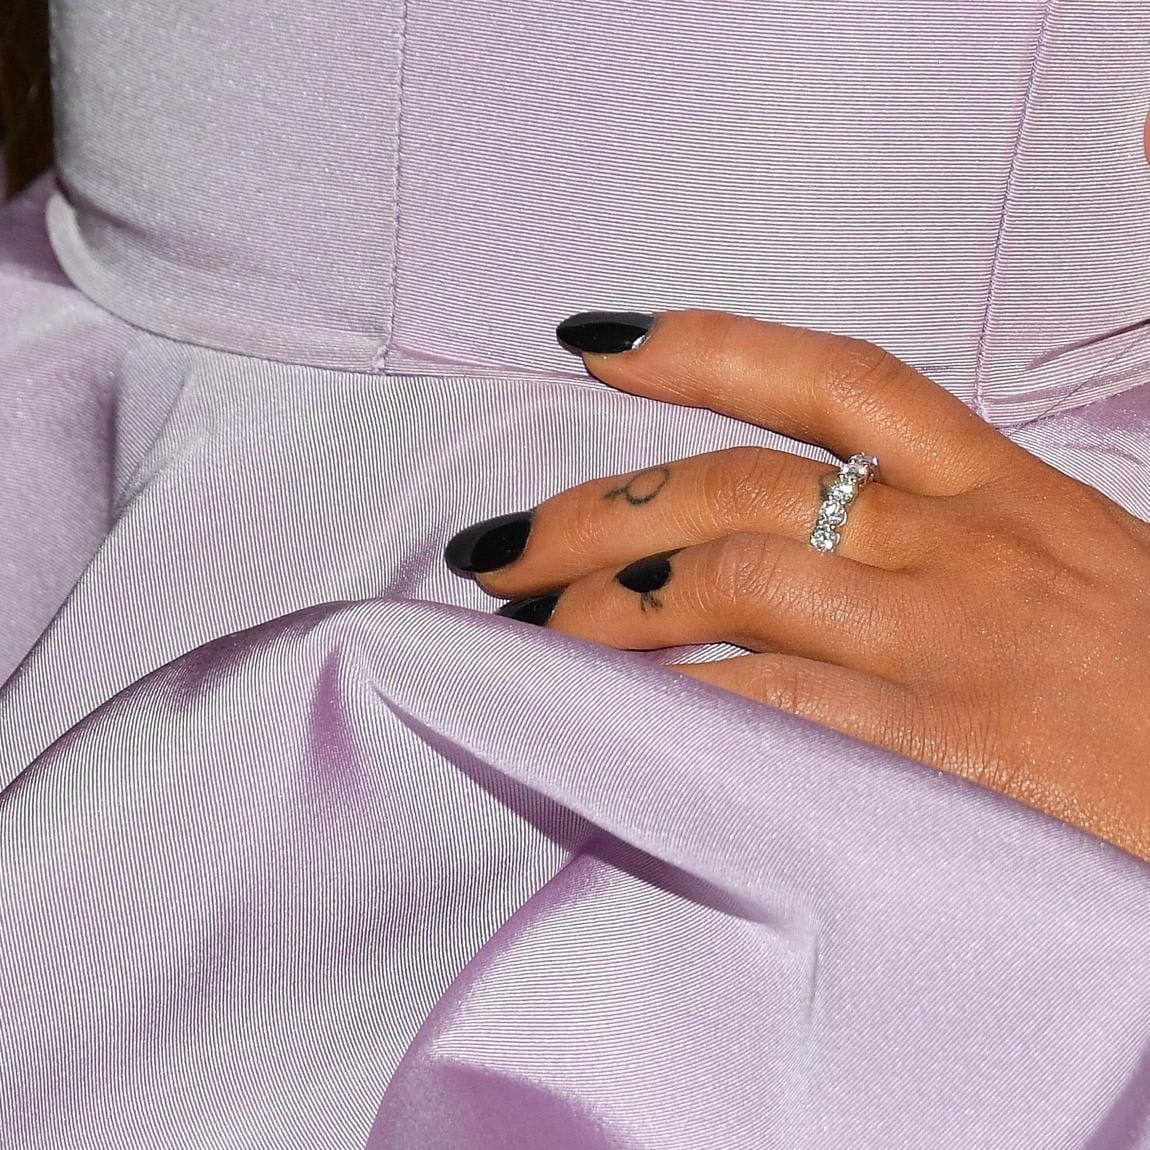 Ariana Grande total black nails